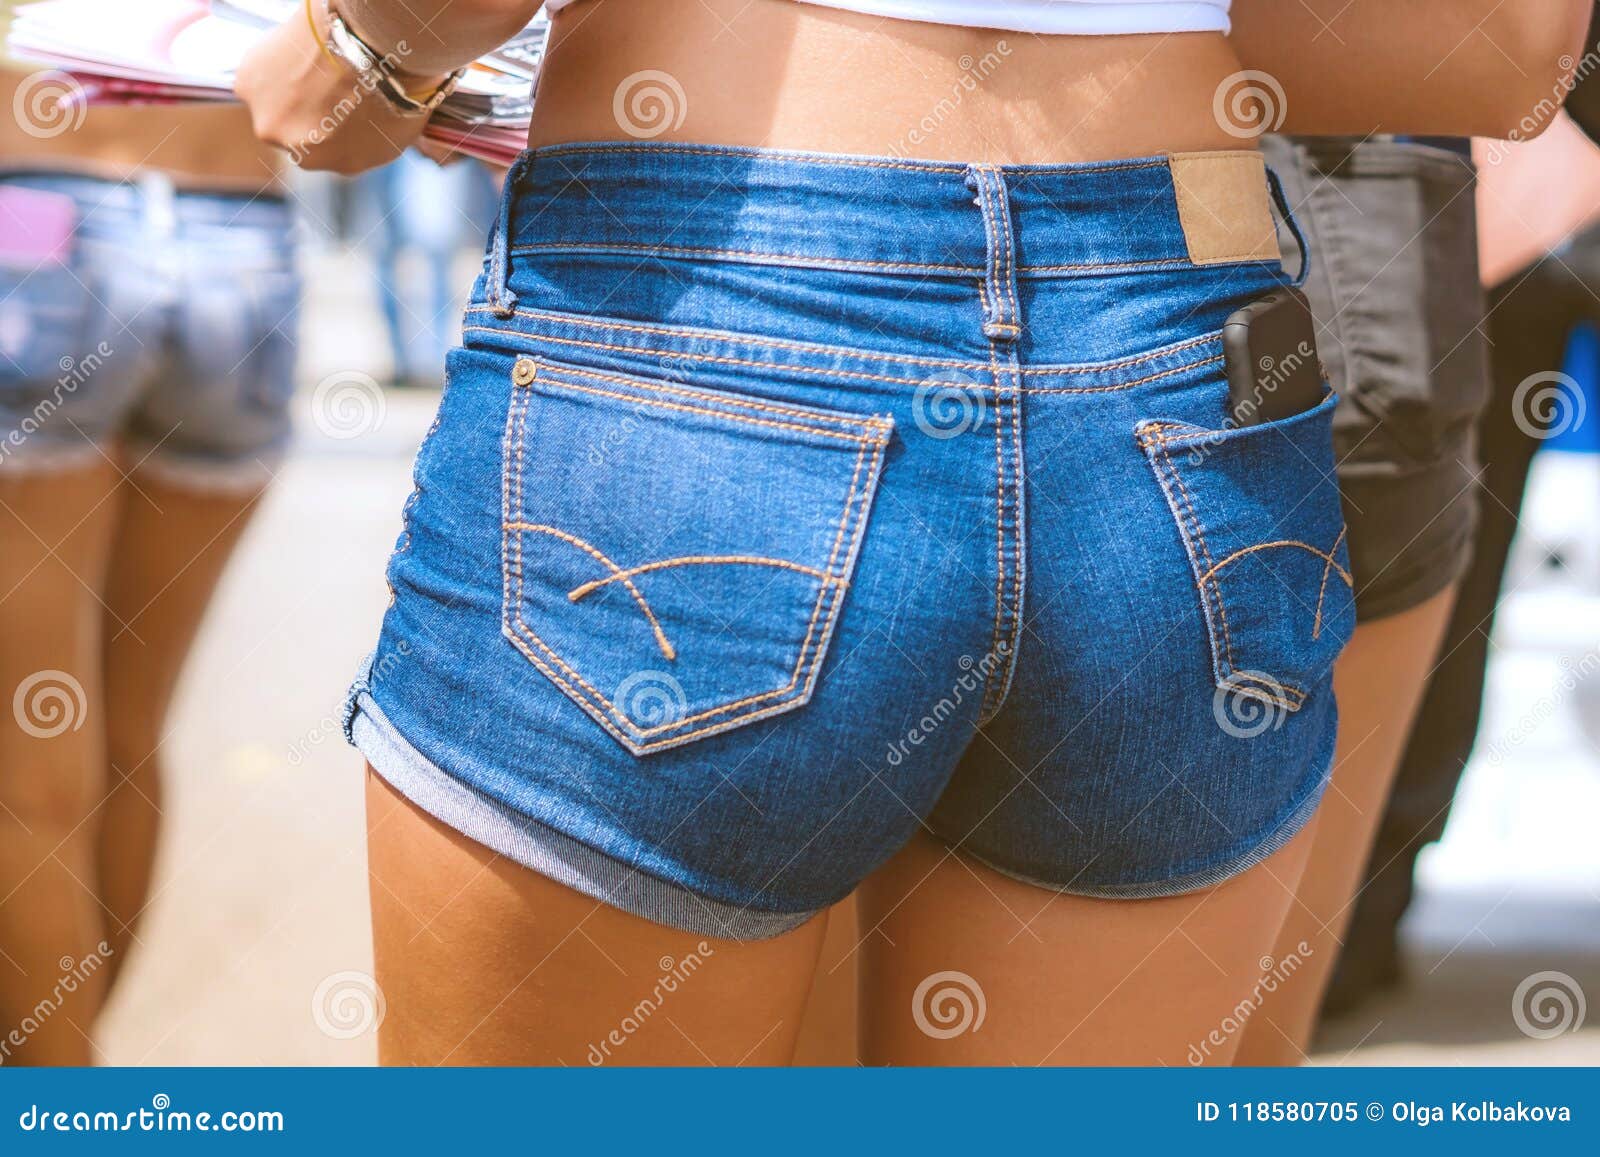 sexiest booty shorts selfie